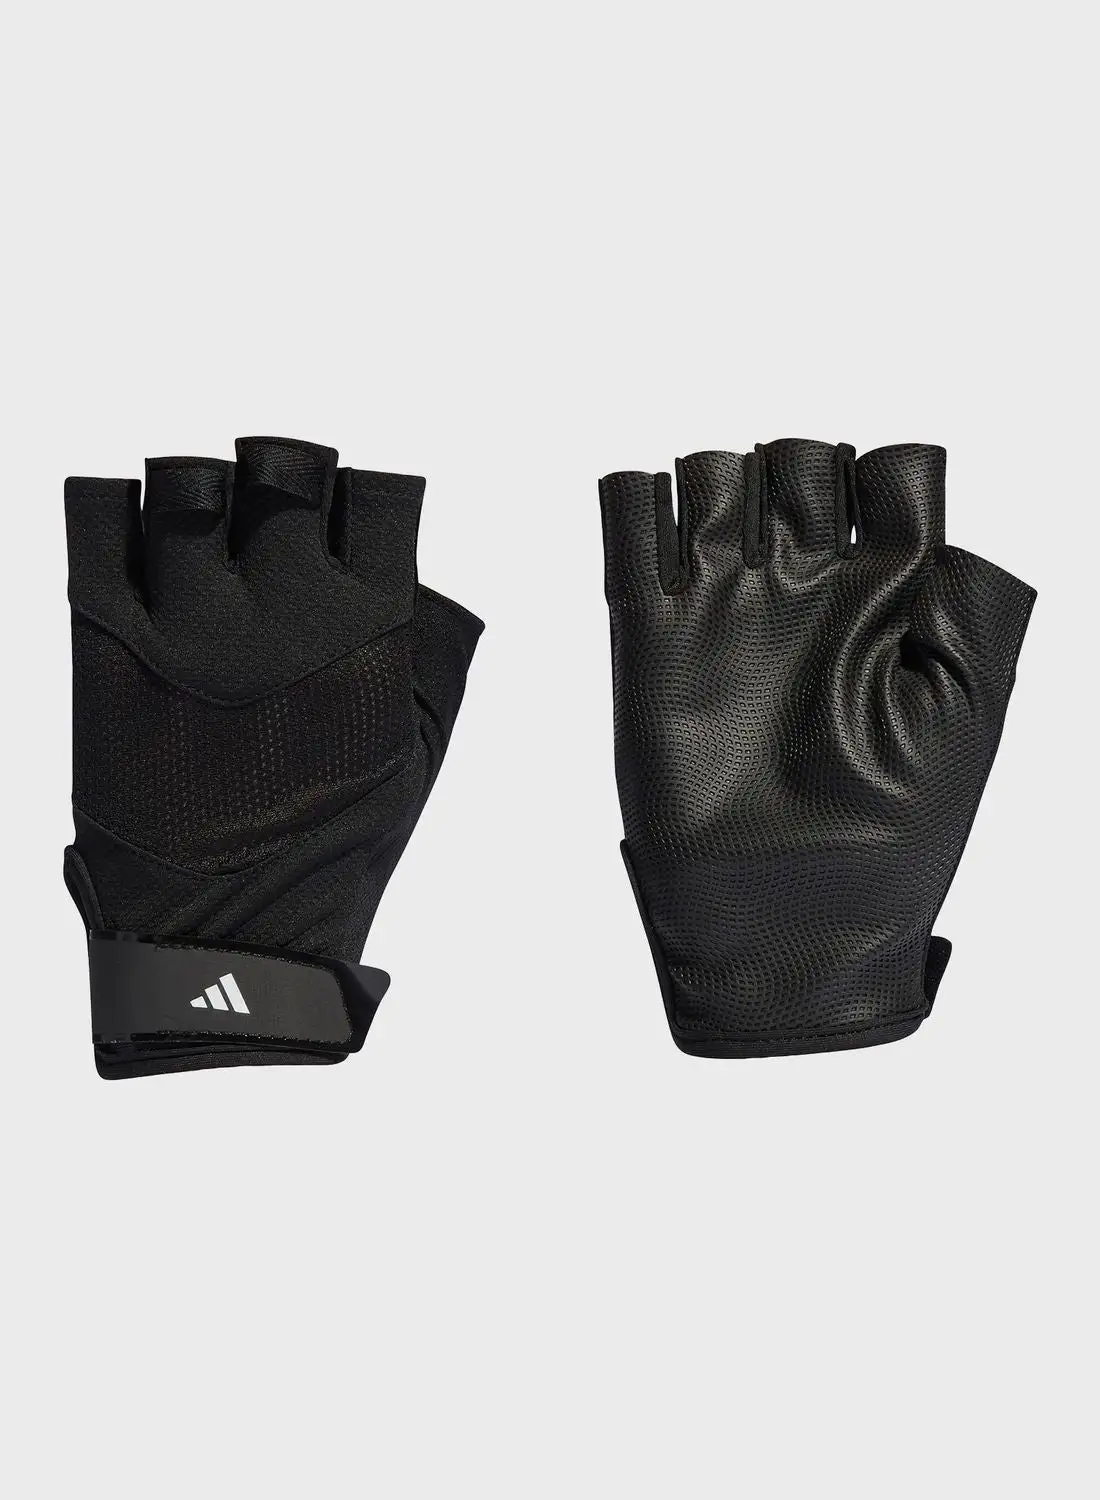 Adidas Training Gloves